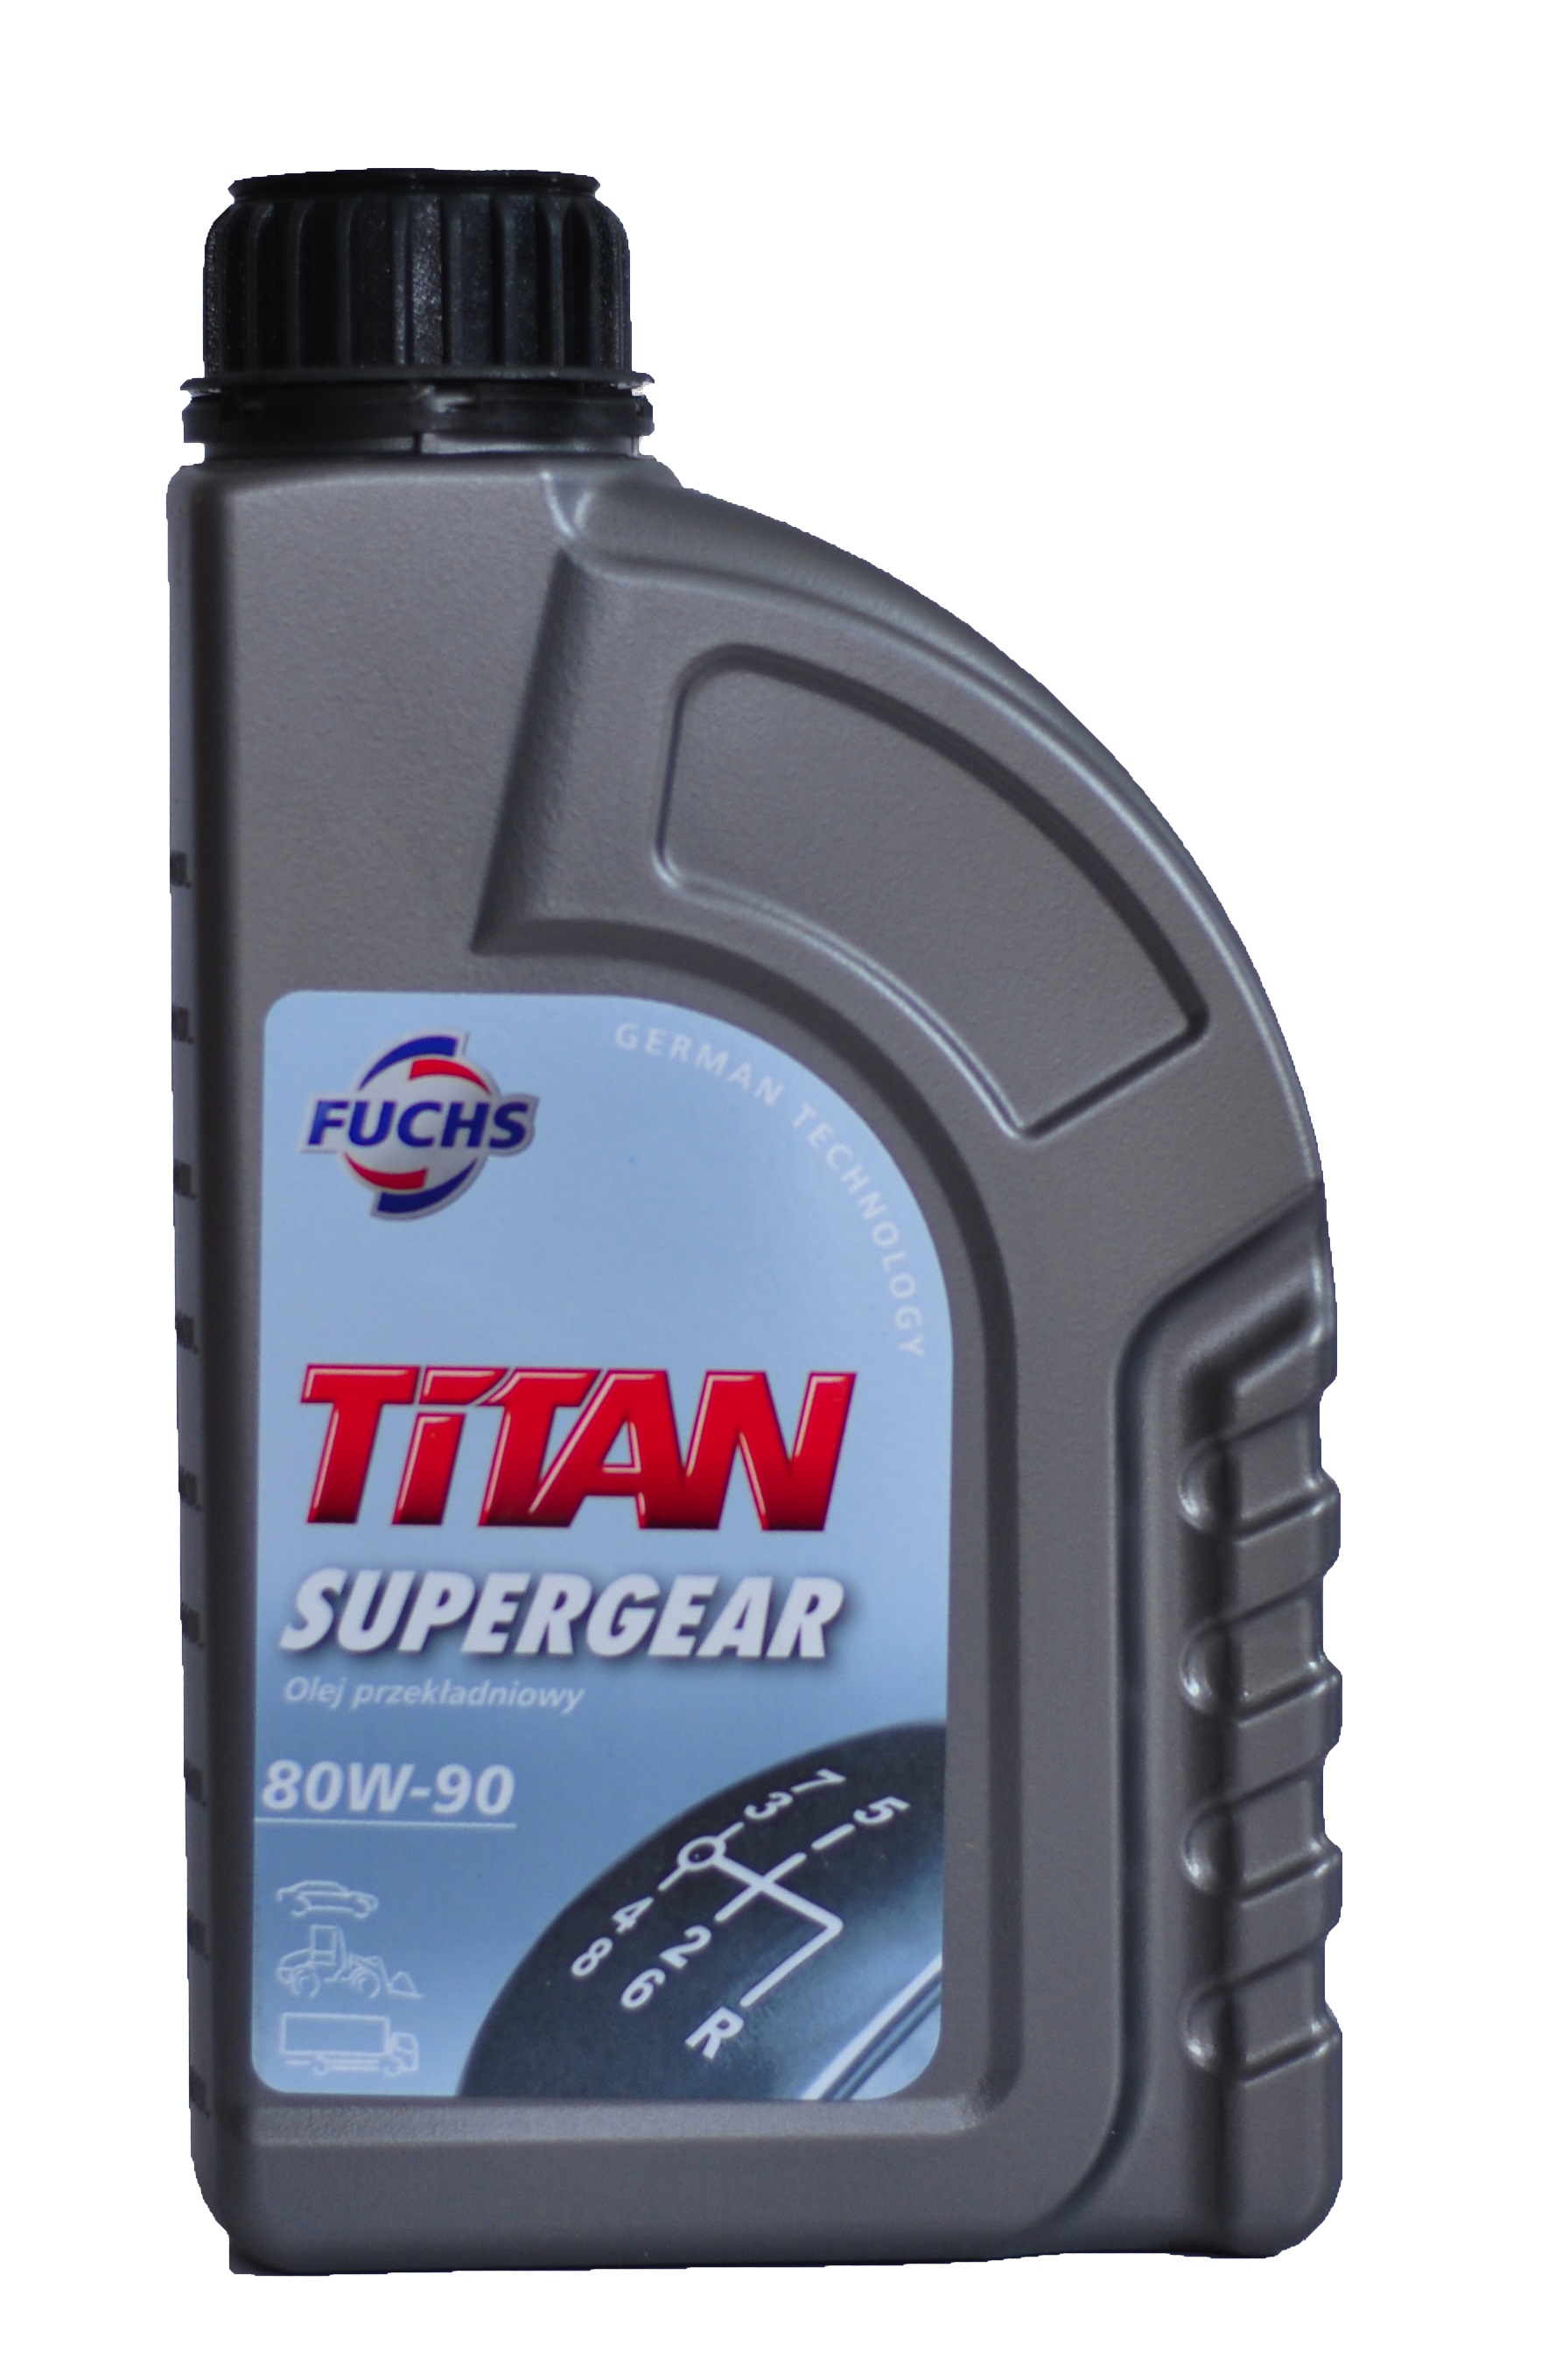 Olej przekładniowy Fuchs TITAN SUPERGear 80W-90, 1L Fuchs 1119